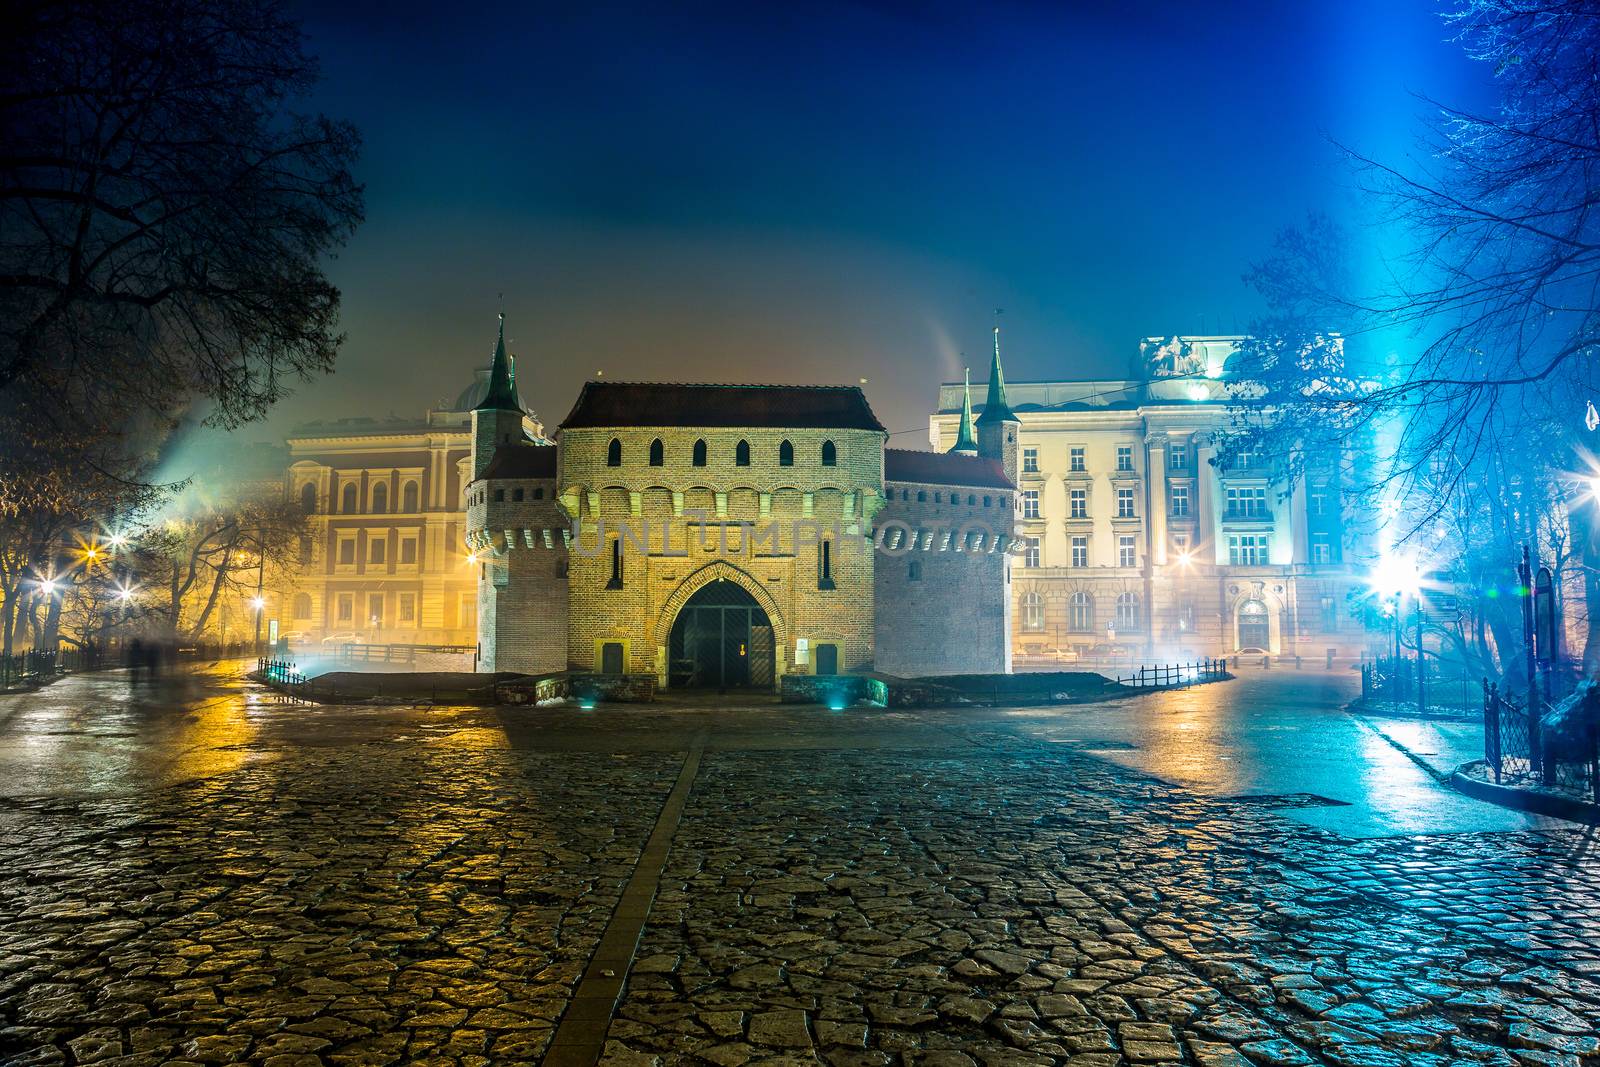 Krakow old city at night